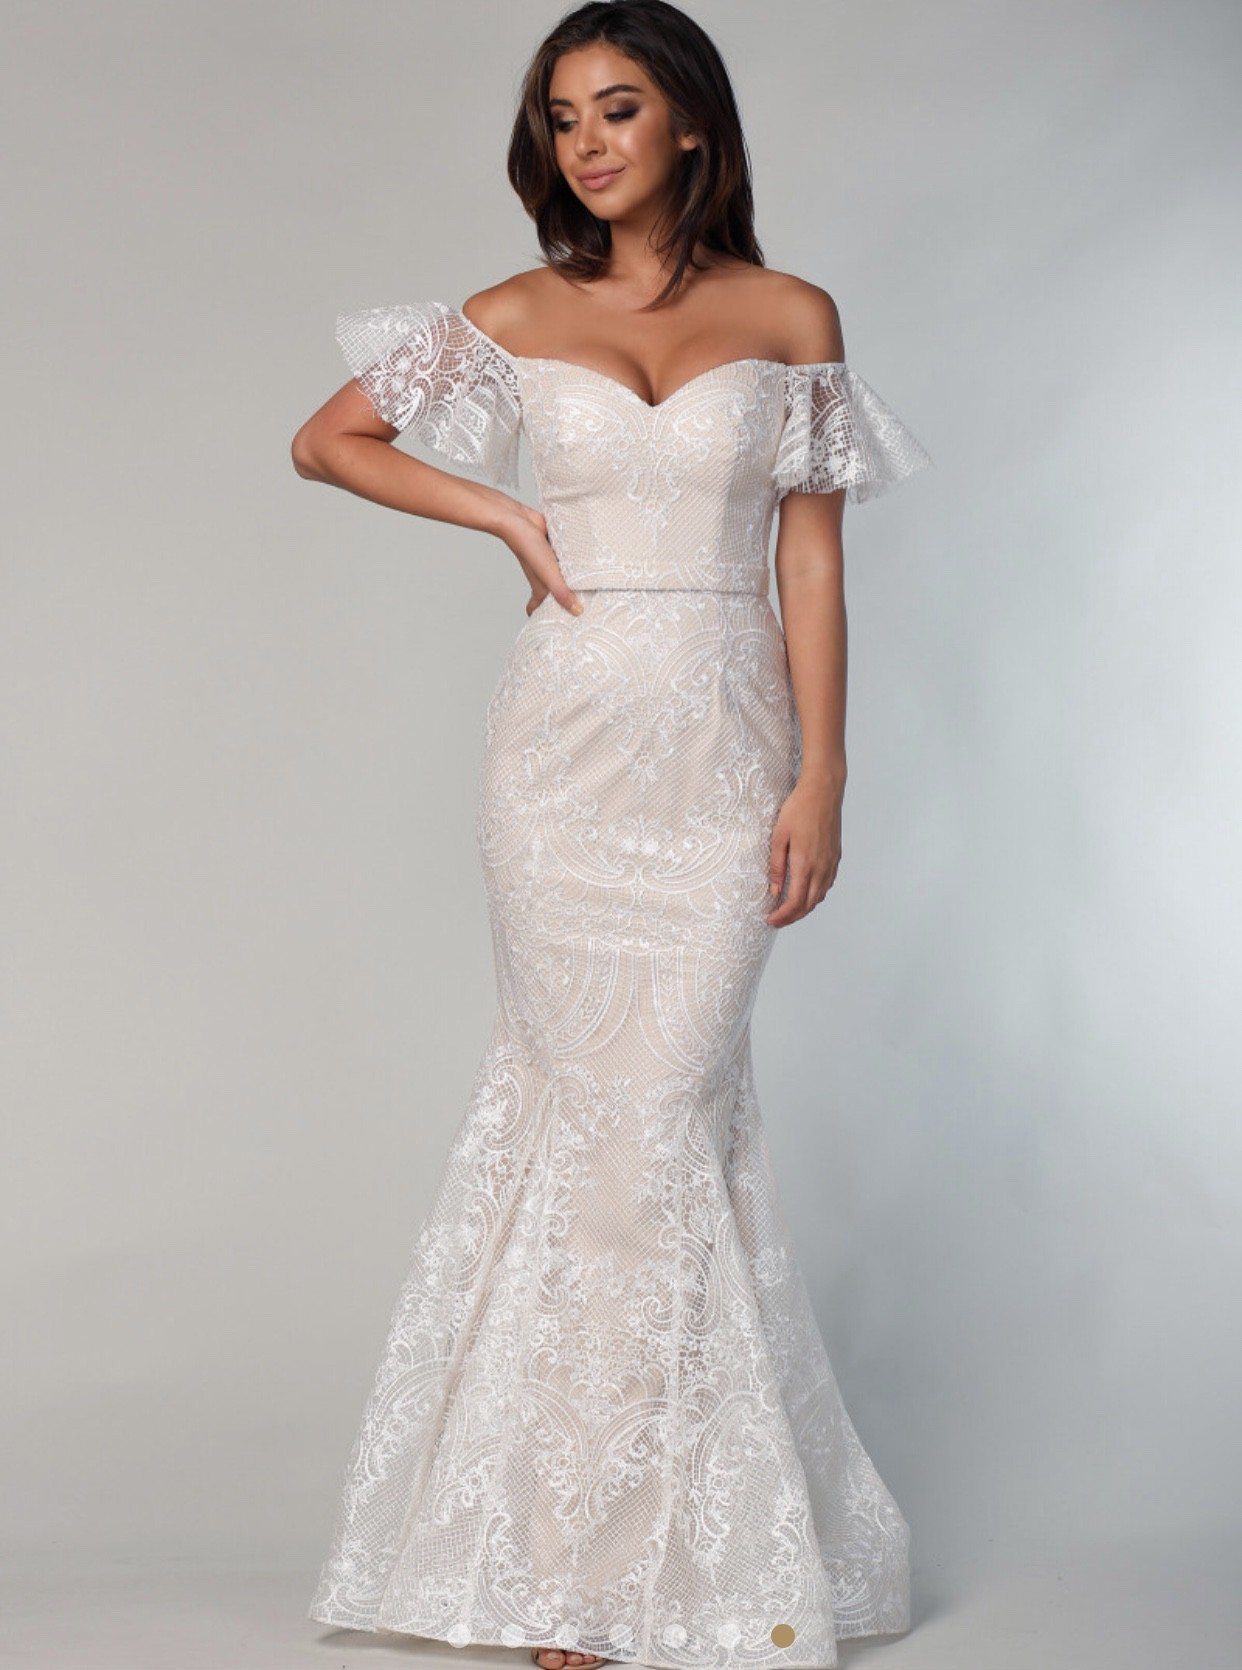 Jadore White Label JX2041 New Wedding Dress Save 29% - Stillwhite